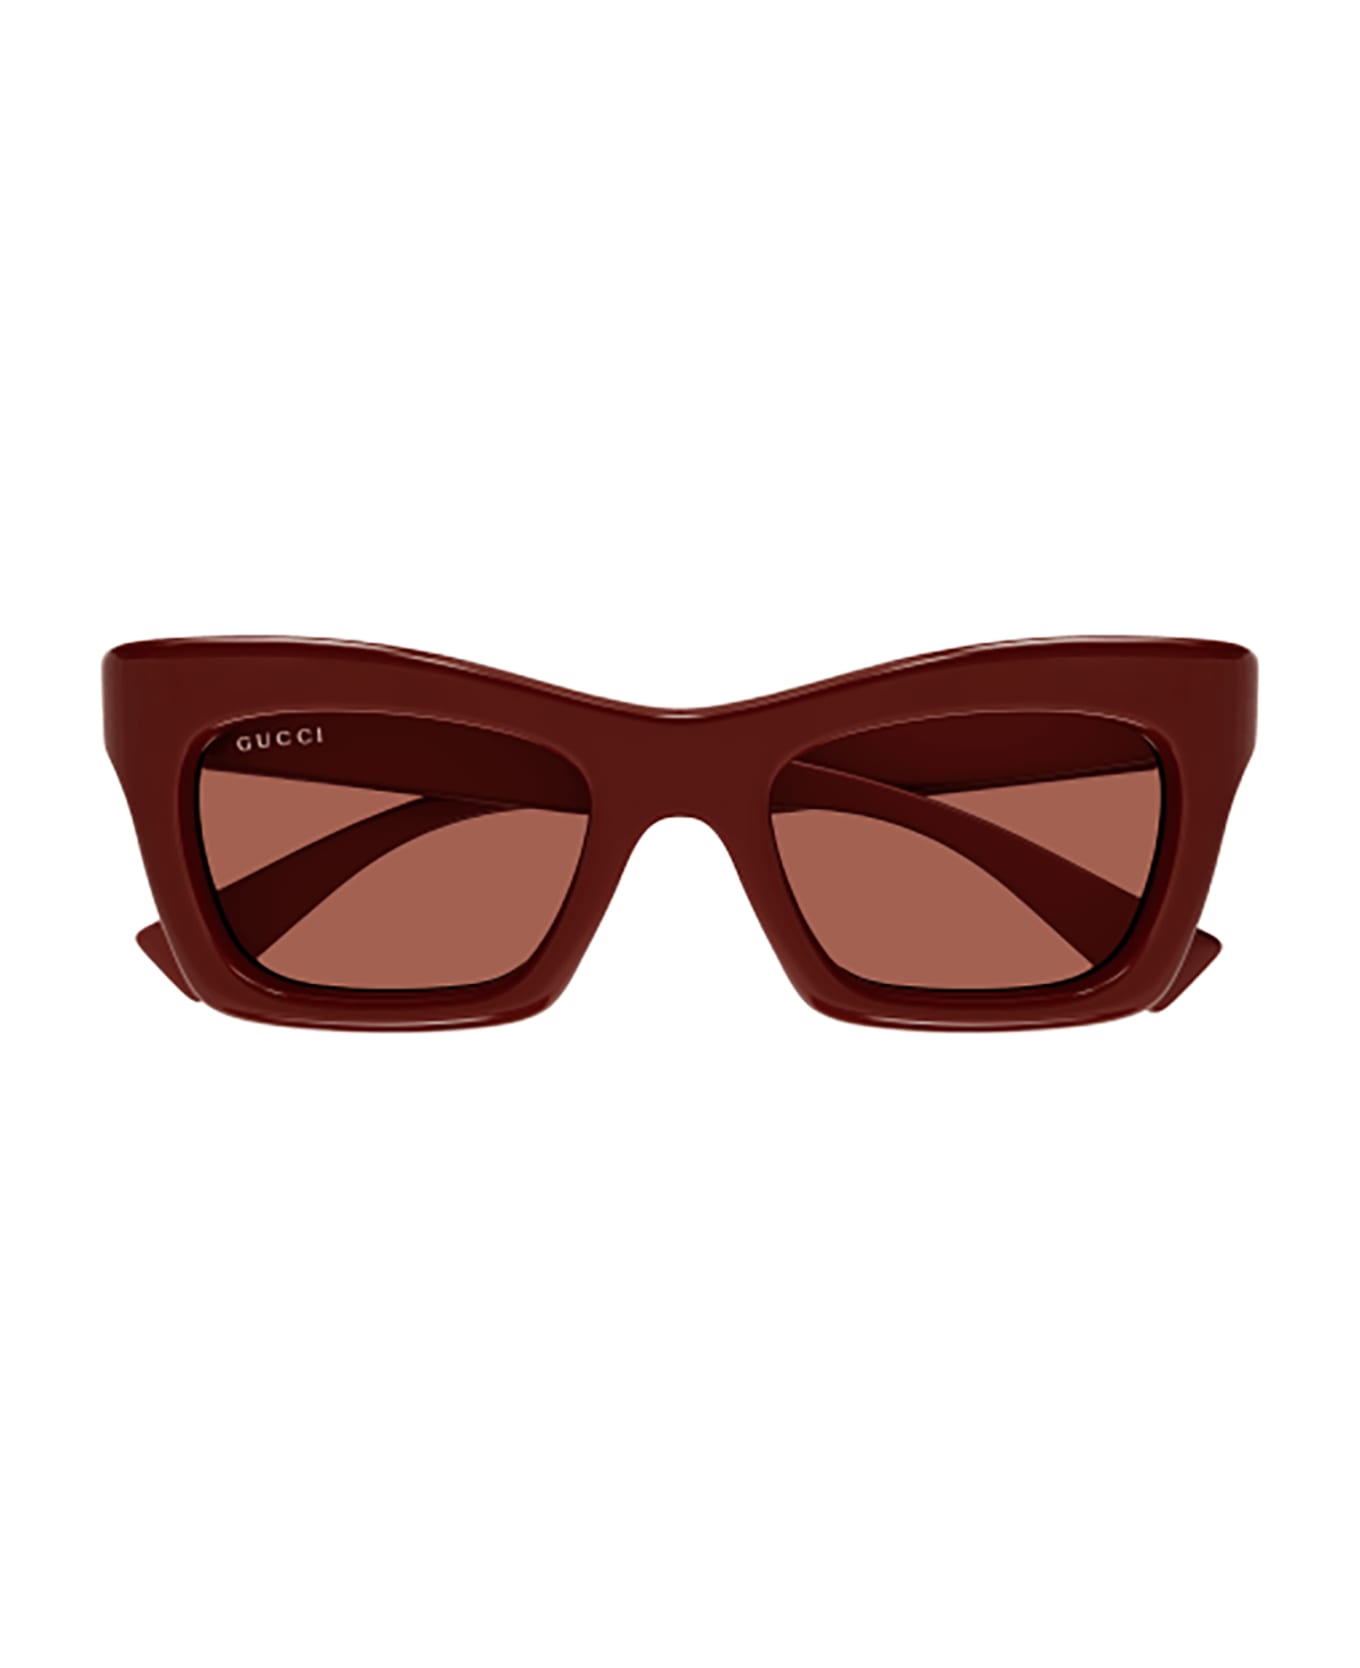 Gucci Eyewear GG1773S Sunglasses - Burgundy Burgundy Bro